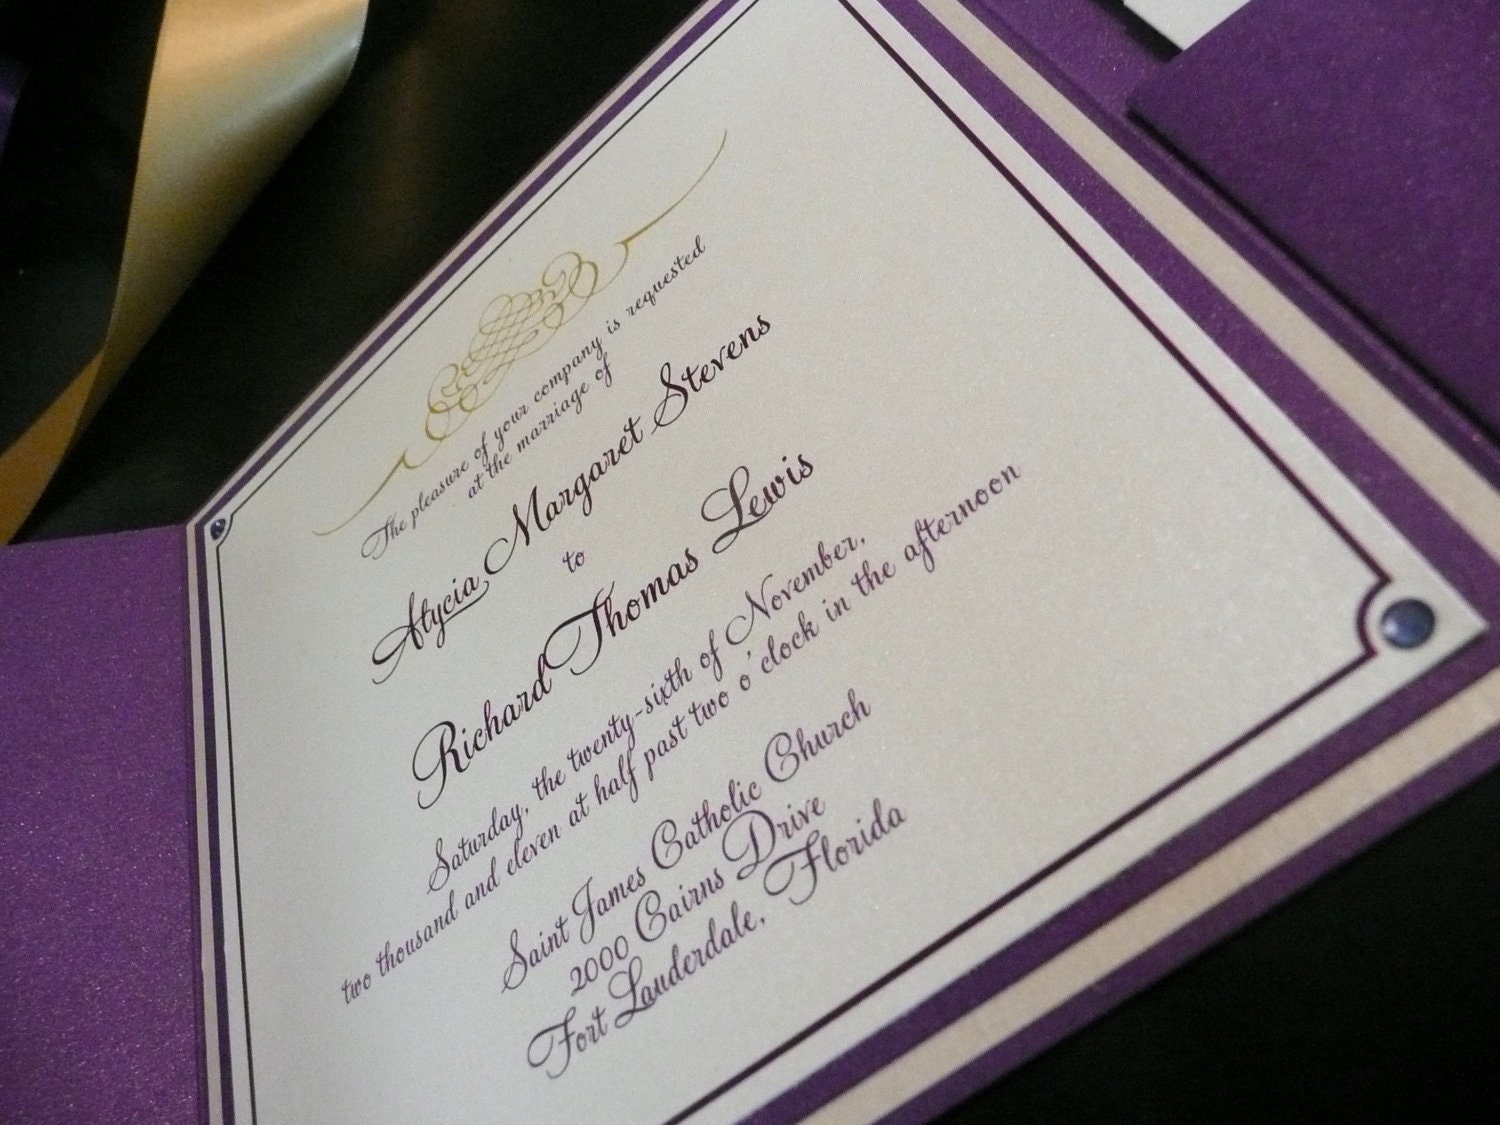 purple damask wedding invitations